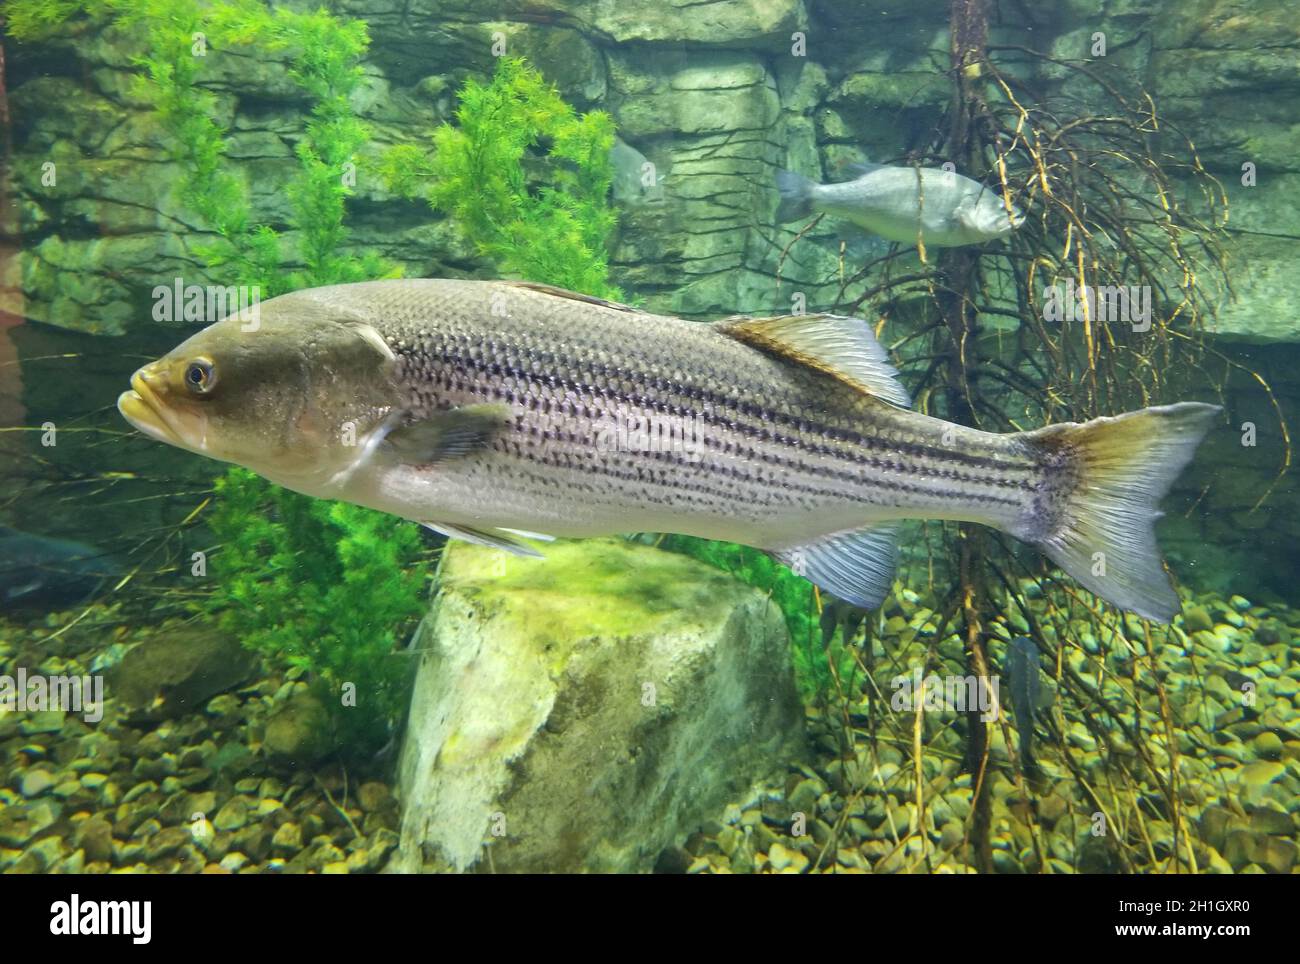 A large striped bass swimming inside an aquarium Stock Photo - Alamy